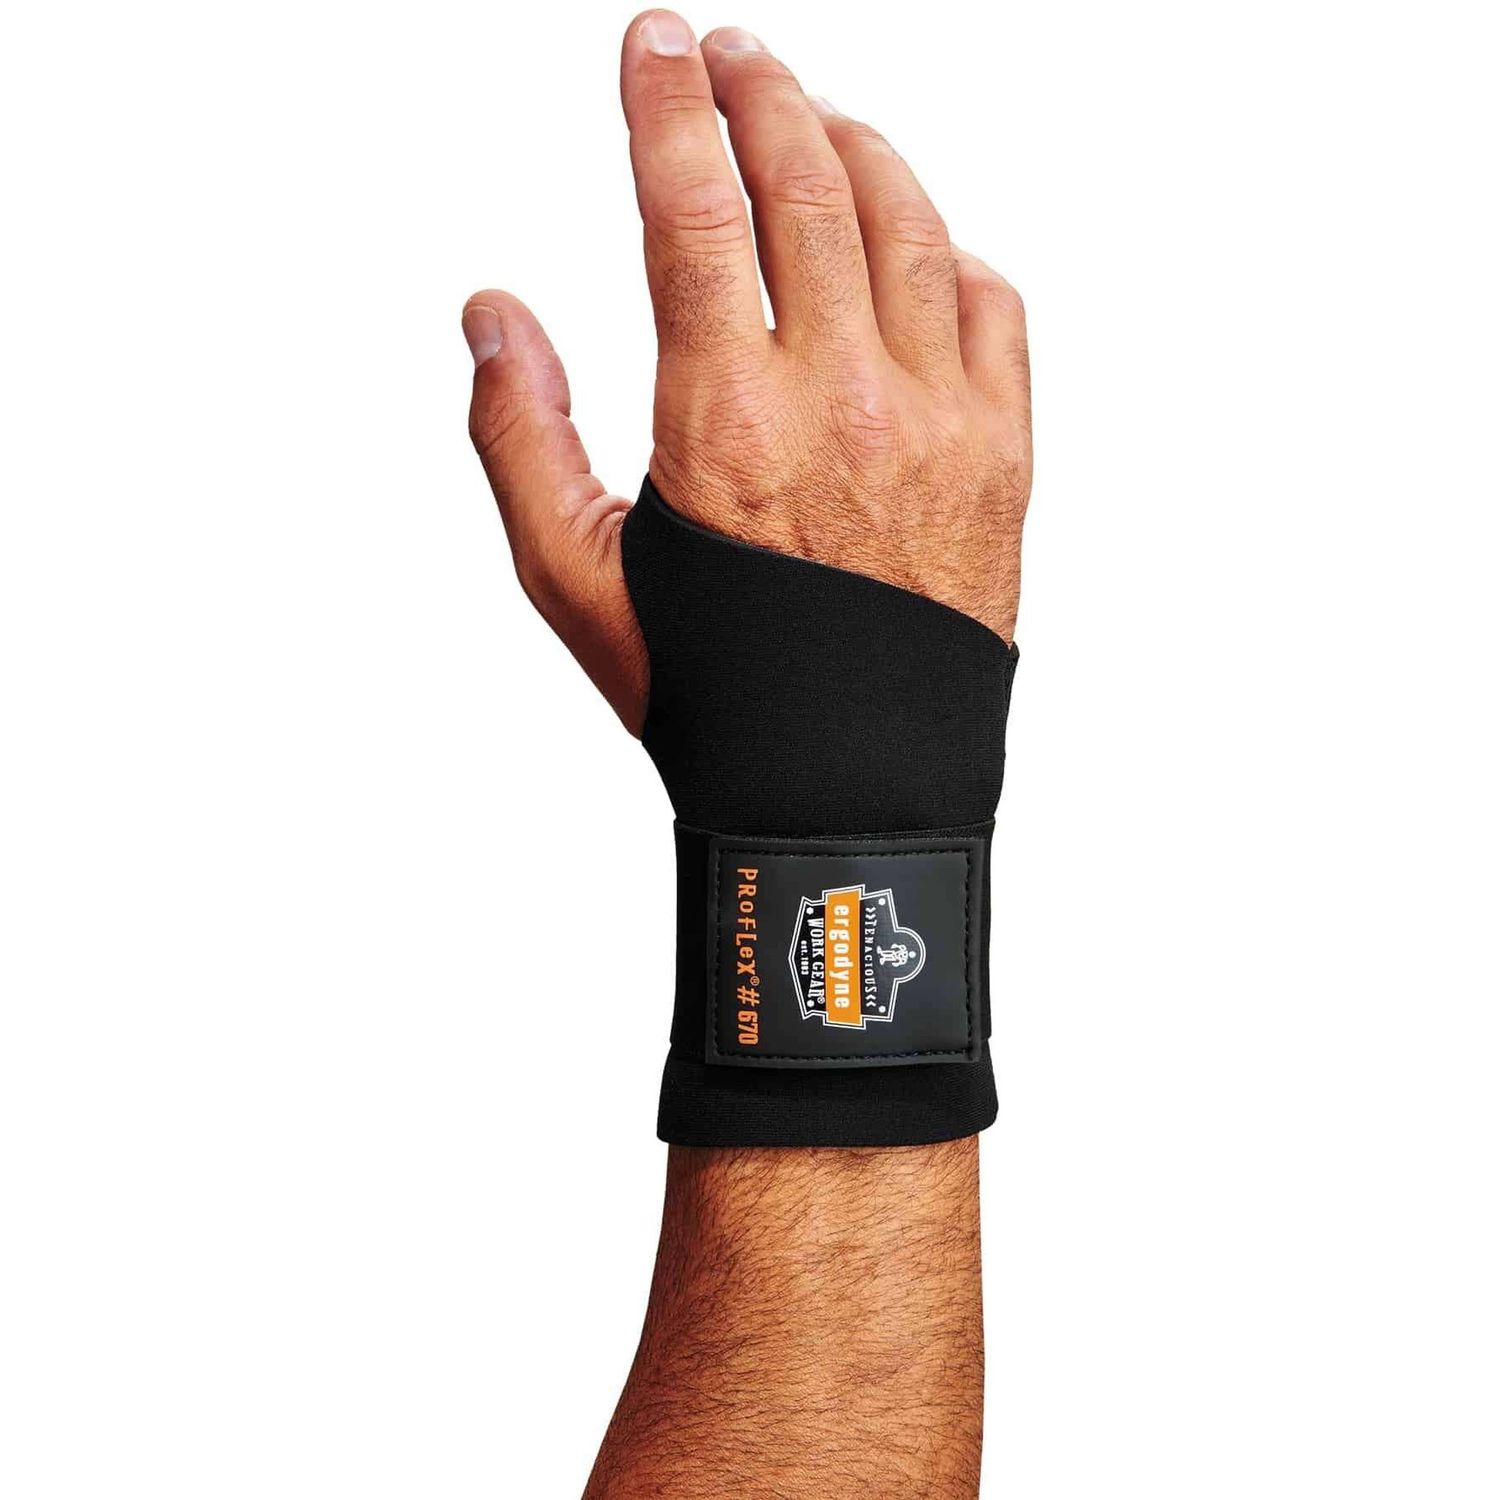 670 Ambidextrous Single Strap Wrist Support Black, Neoprene, Elastic, Woven